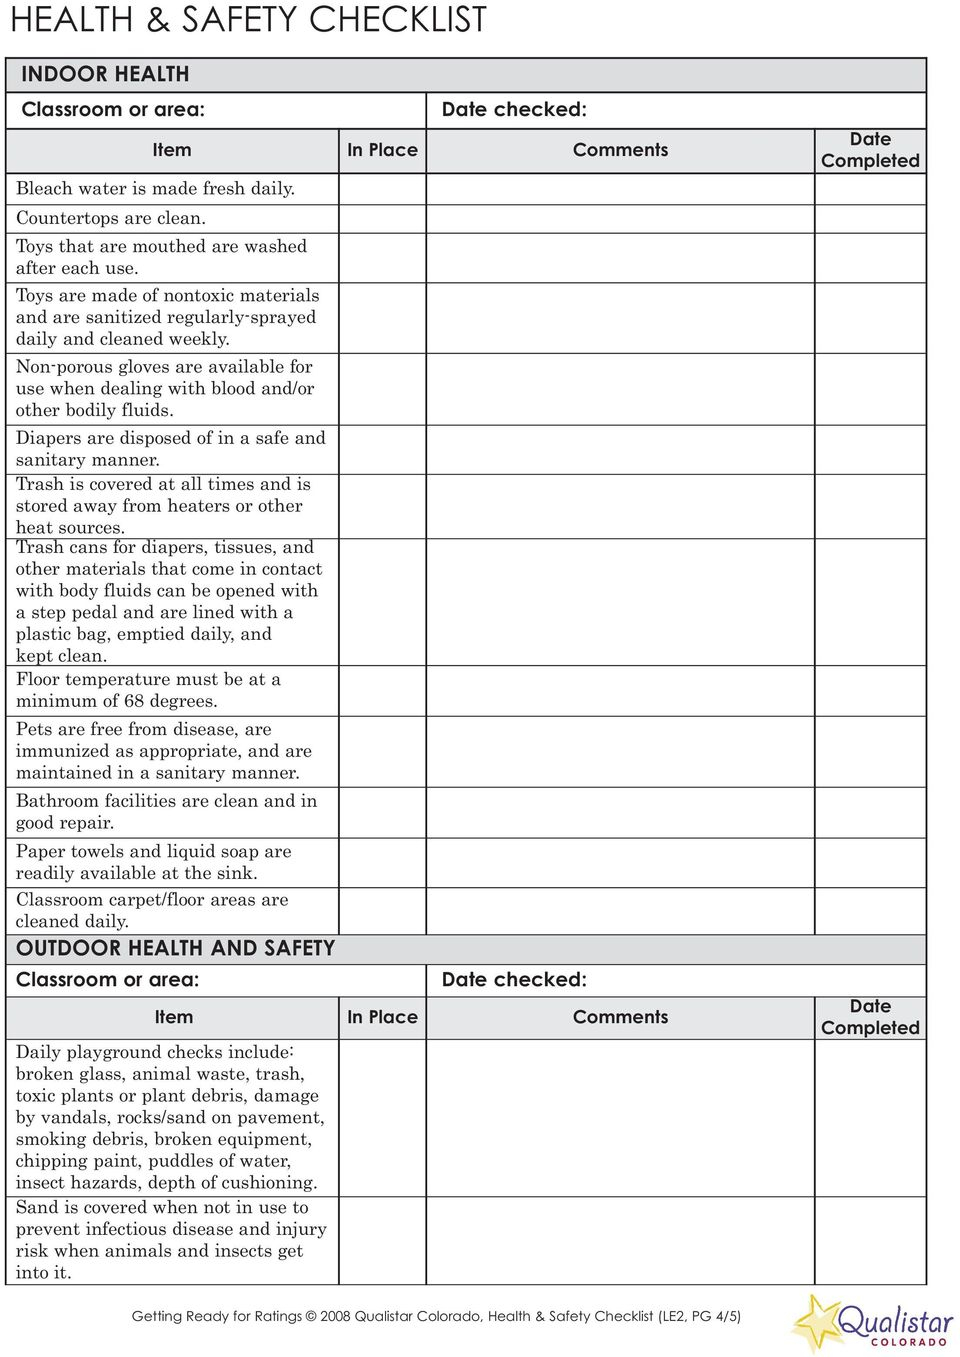 Playground Safety Checklist For Daycares - MenalMeida Within Child Care Safety Checklist Template For Child Care Safety Checklist Template